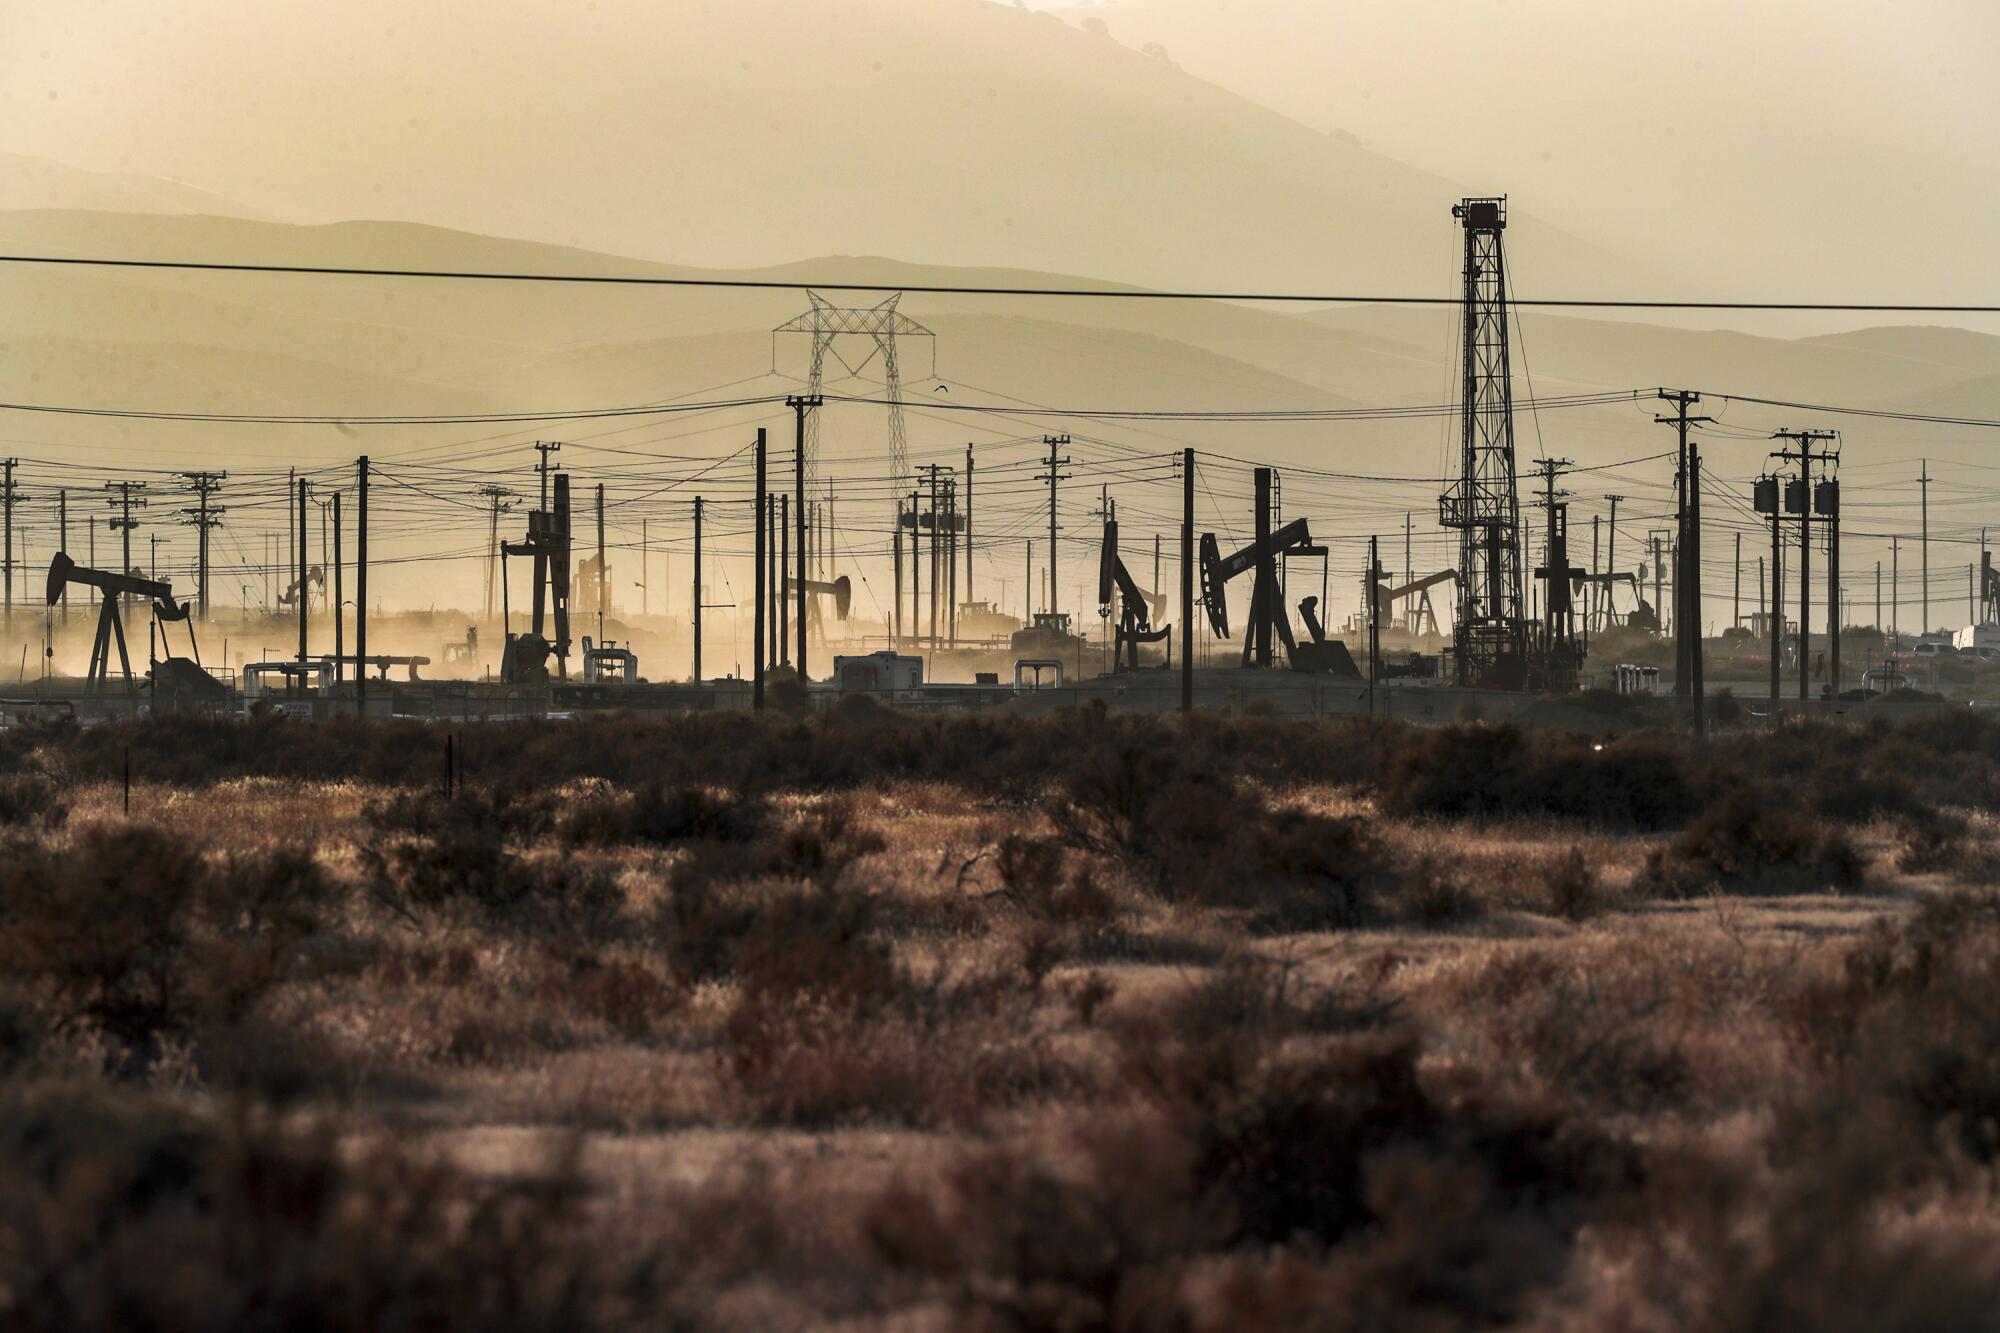 Oil pumpjacks and power lines fill a desert landscape.